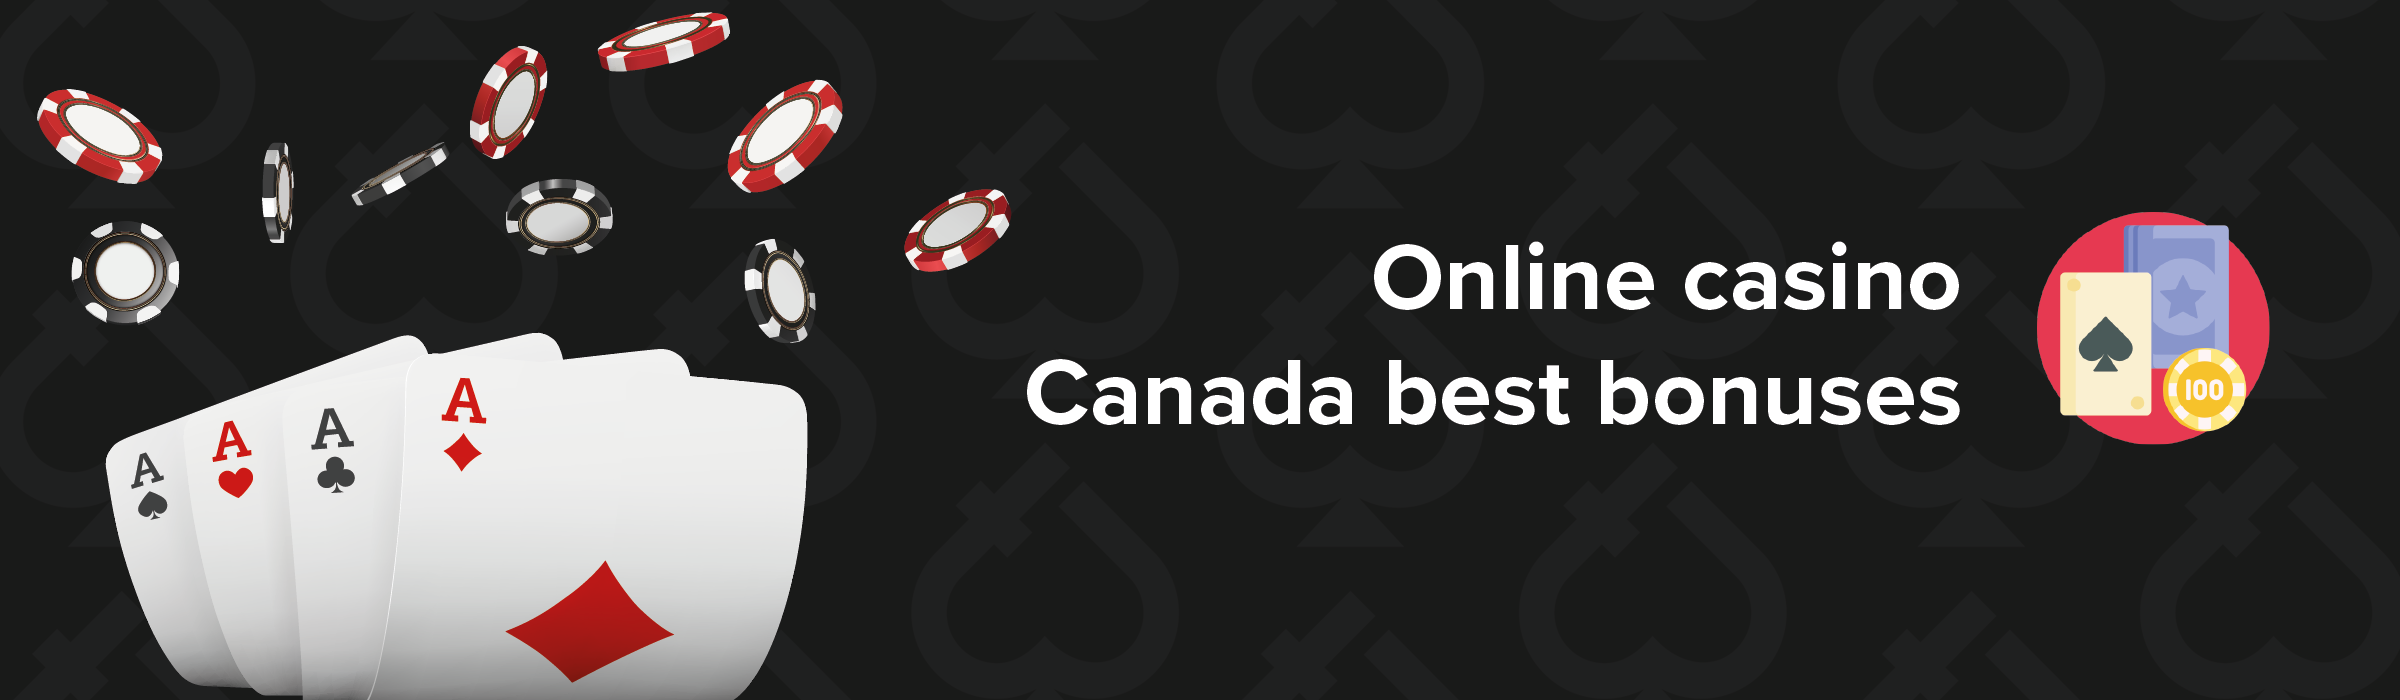 best online casinos in canada 2021